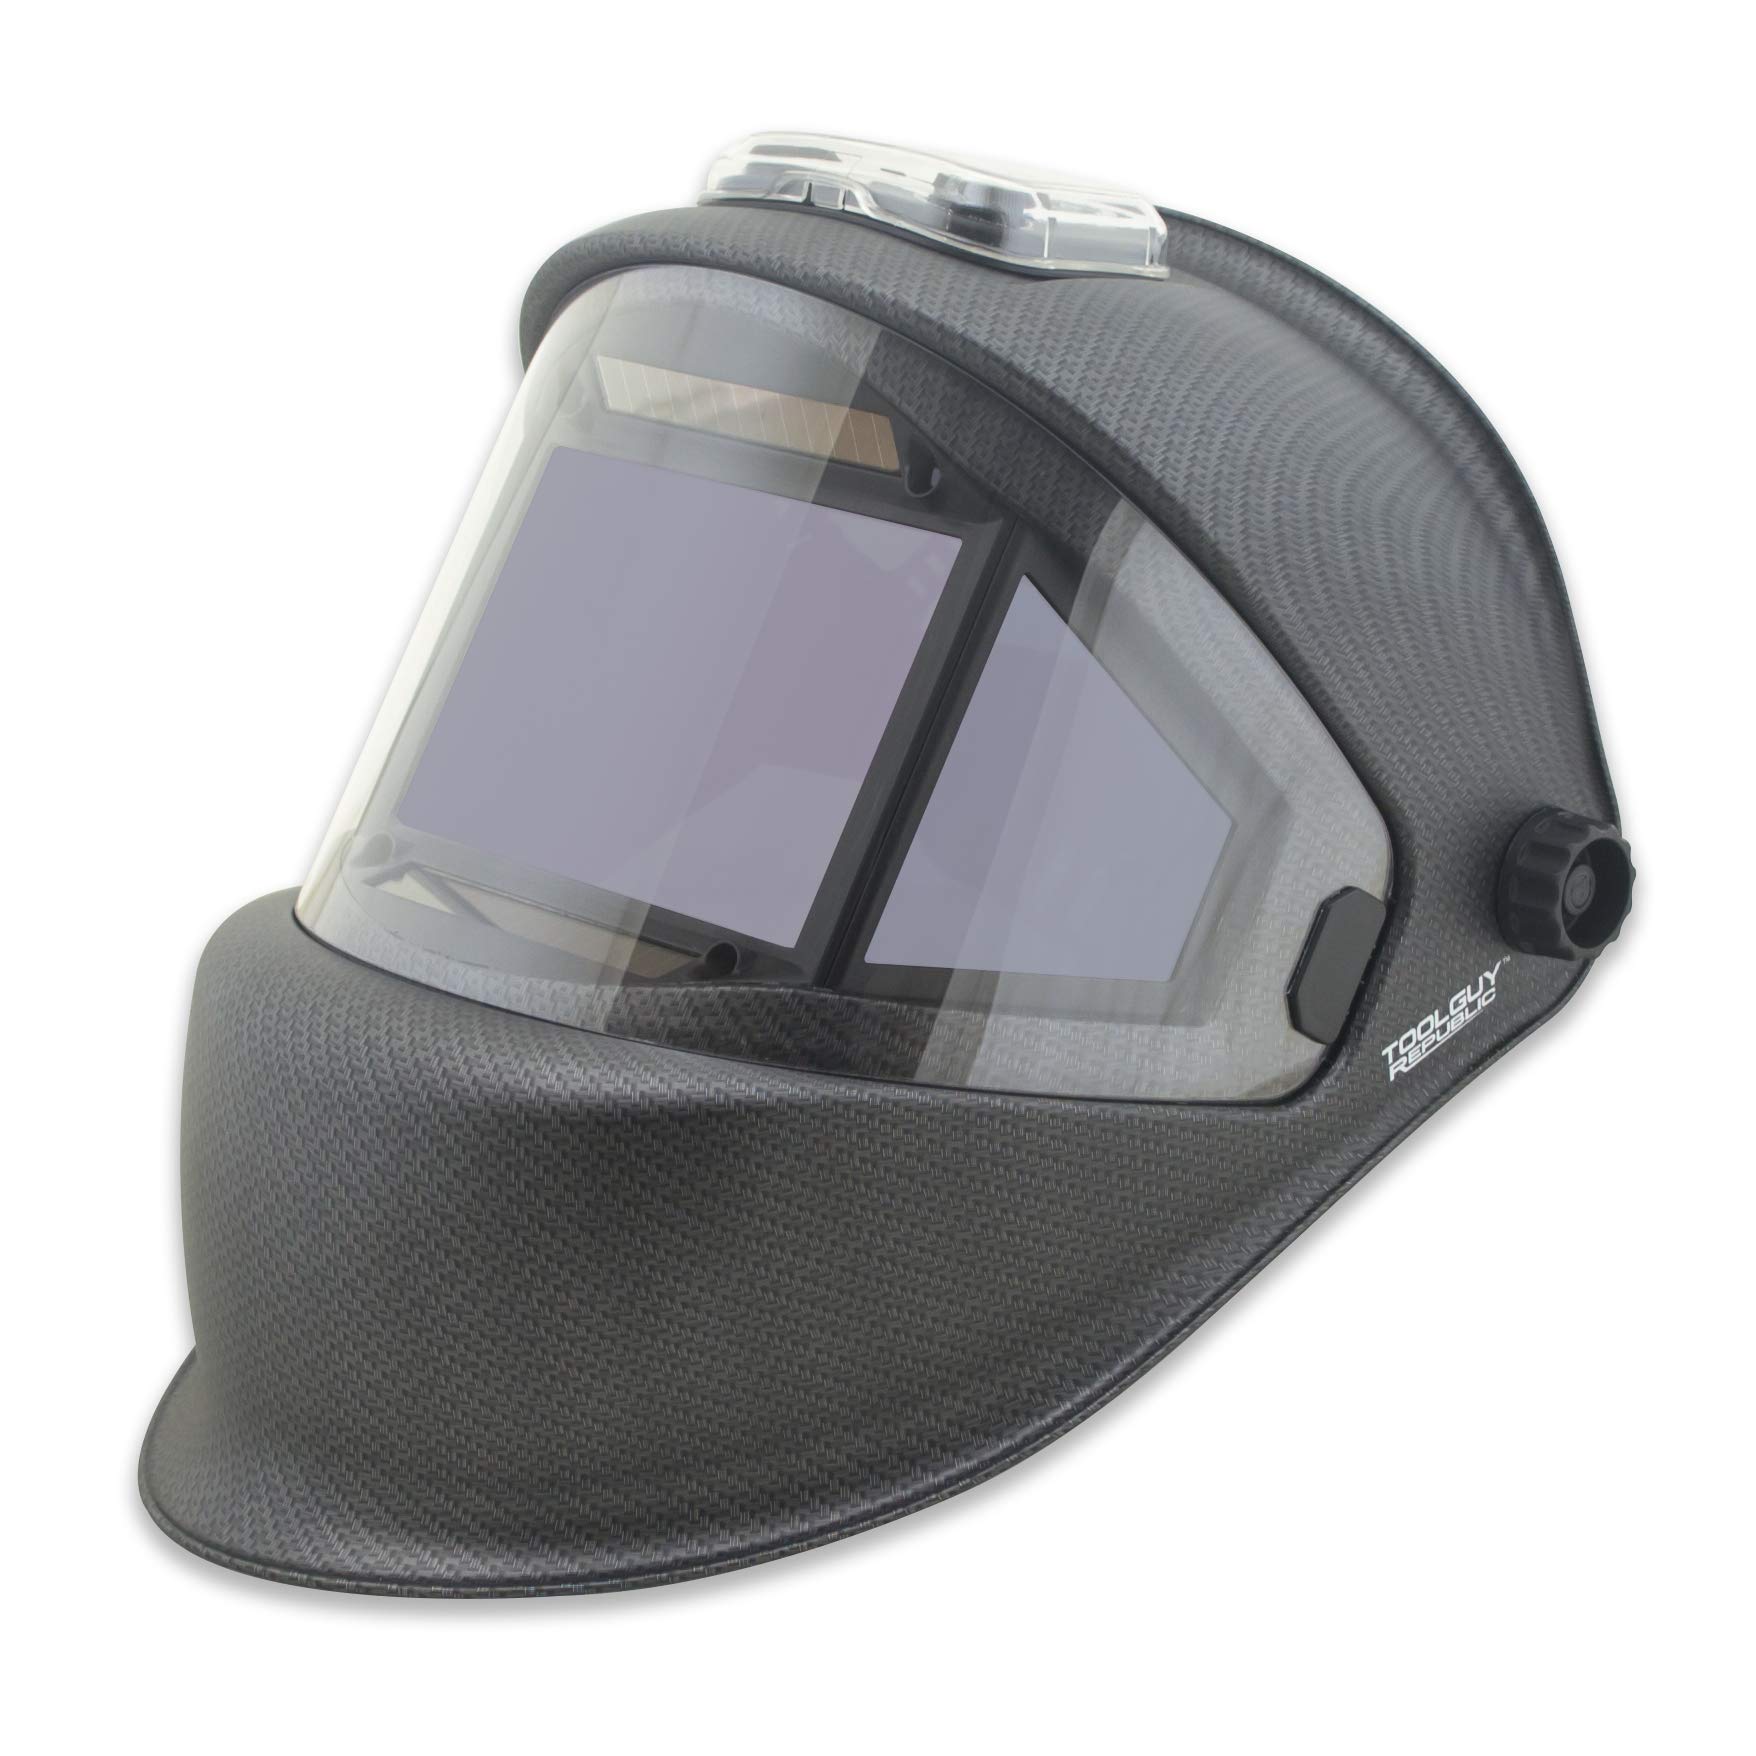 TGR Panoramic 180 View Solar Powered Auto Darkening Welding Helmet - True Color (MATTE CARBON FIBER)